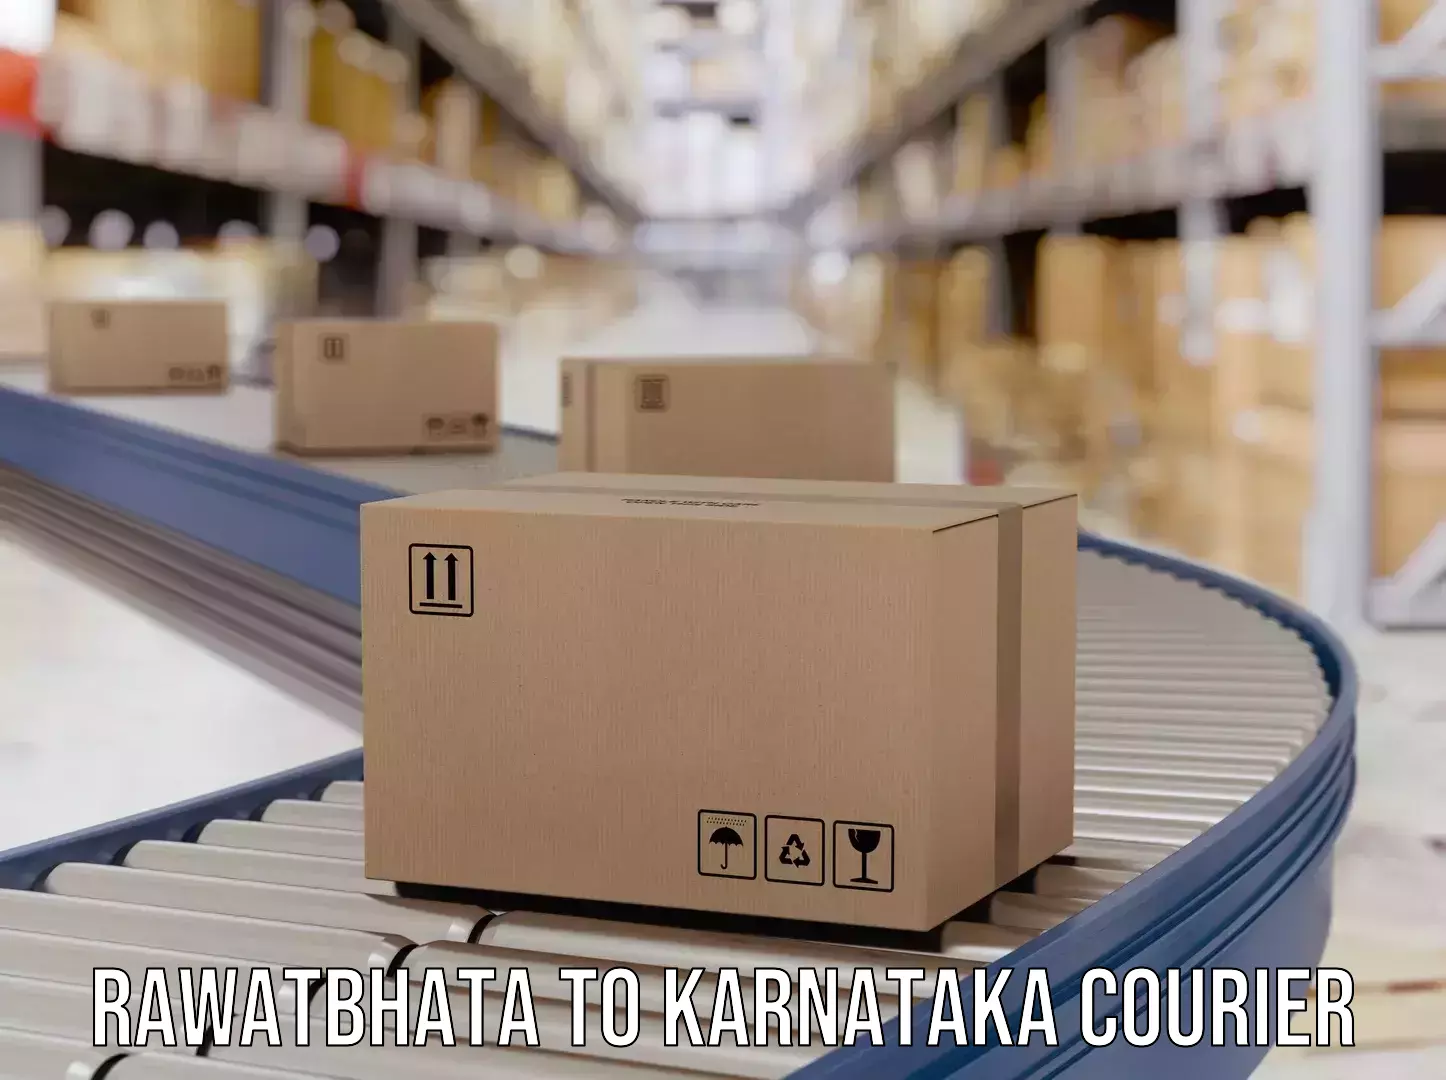 Efficient cargo handling Rawatbhata to Karnataka